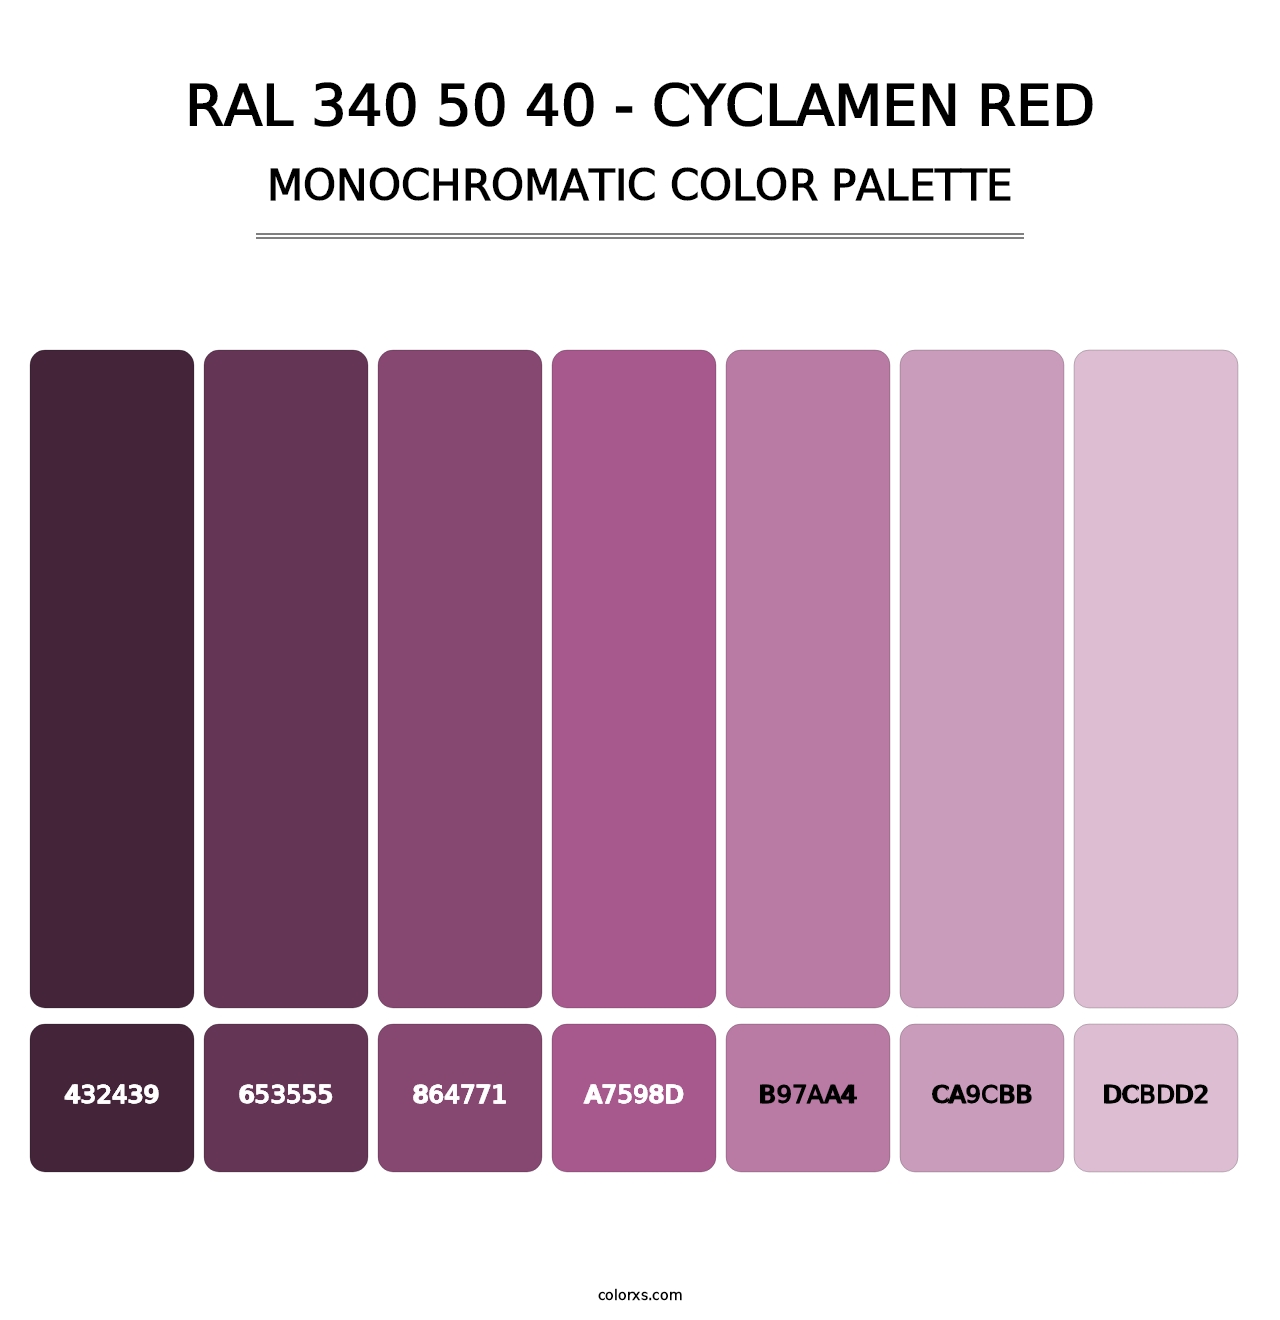 RAL 340 50 40 - Cyclamen Red - Monochromatic Color Palette